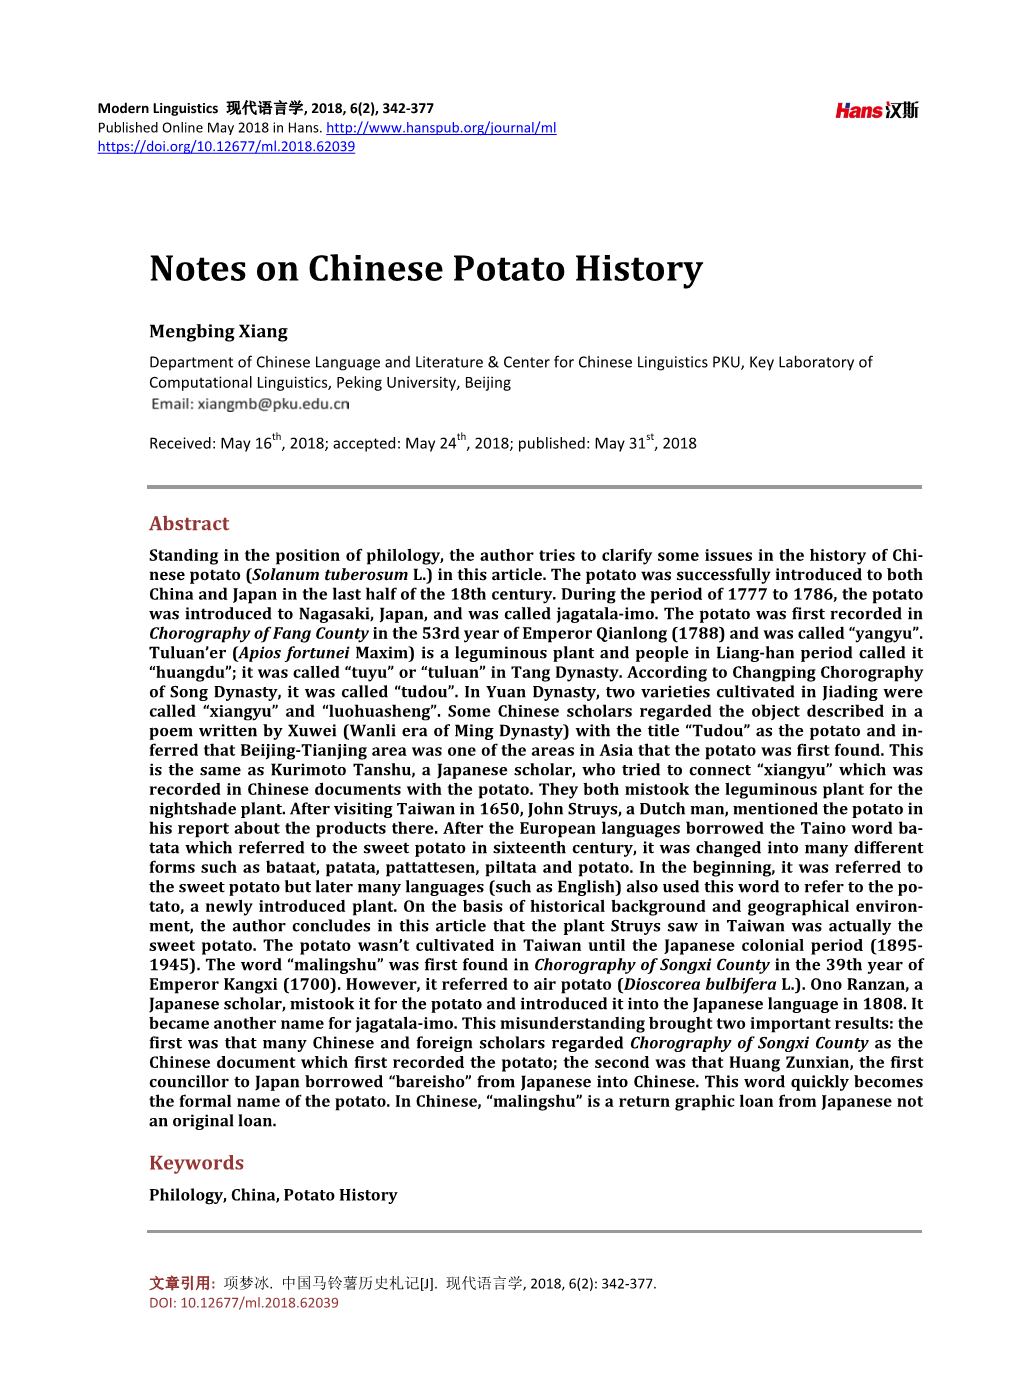 5.Noteson Chinese Potato History.现代语言学